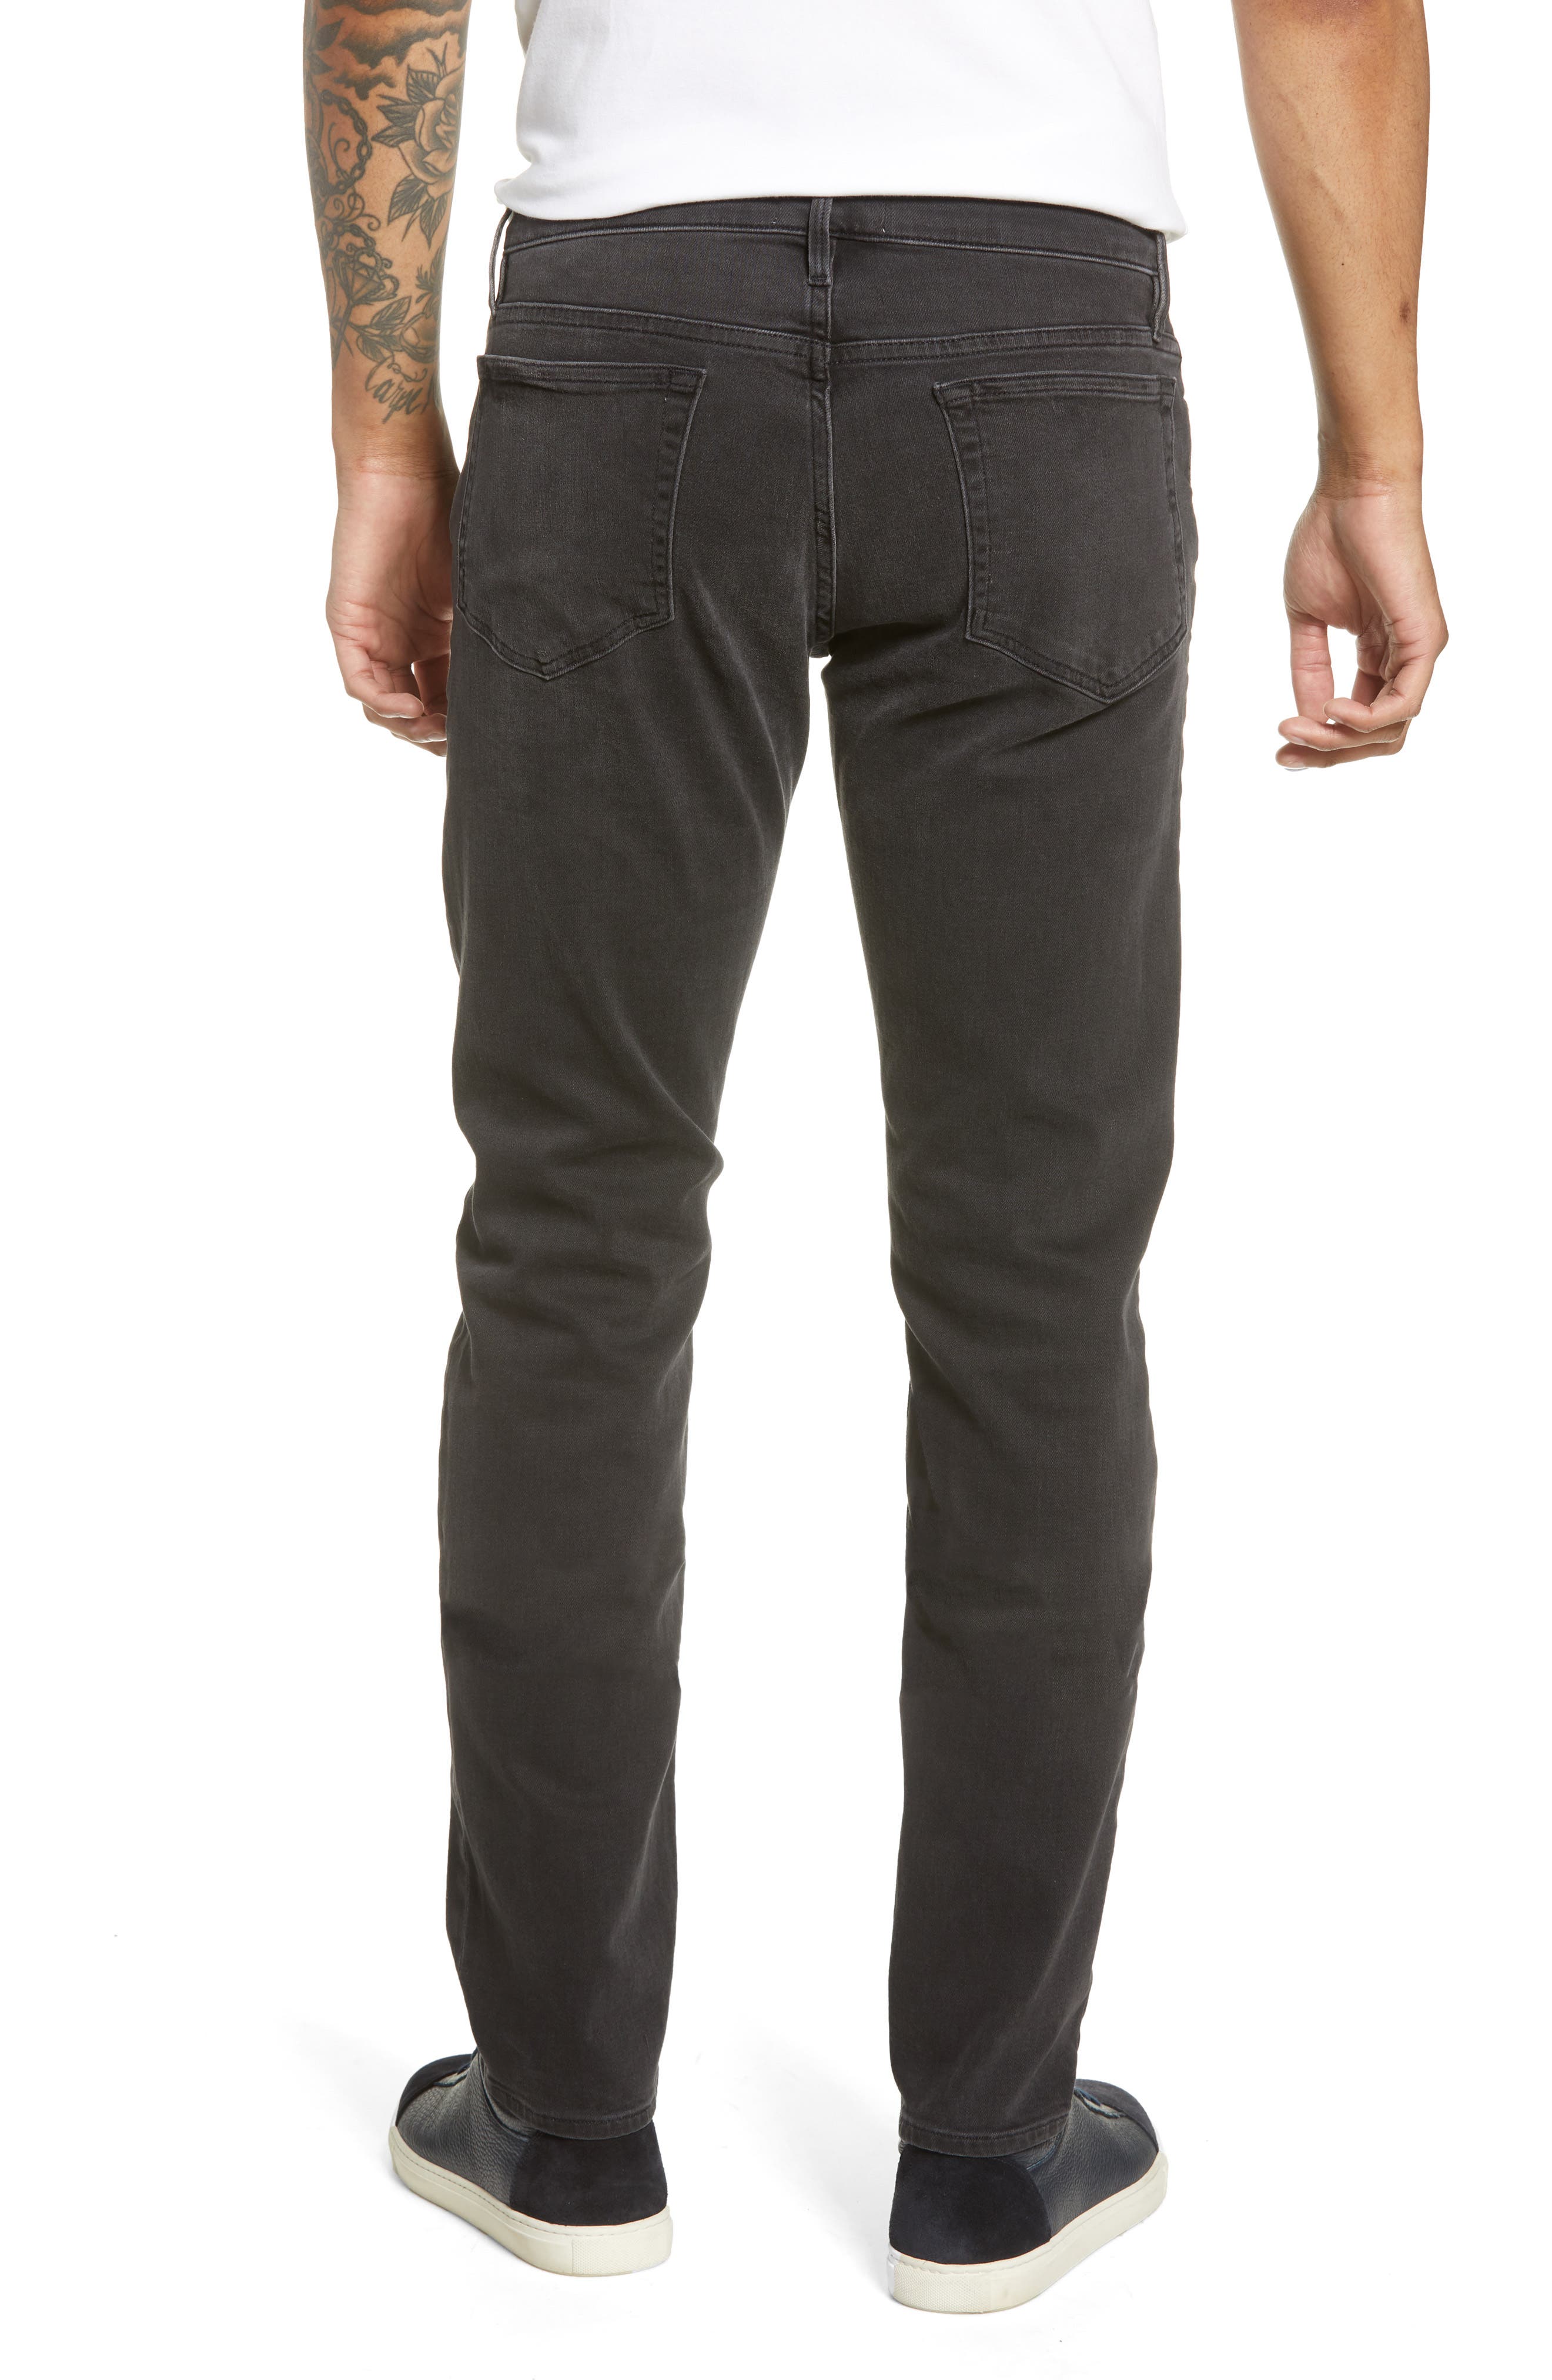 FRAME DENIM L'Homme Men's Mid Rise Slim Denim Jeans Dark Grey $199 69